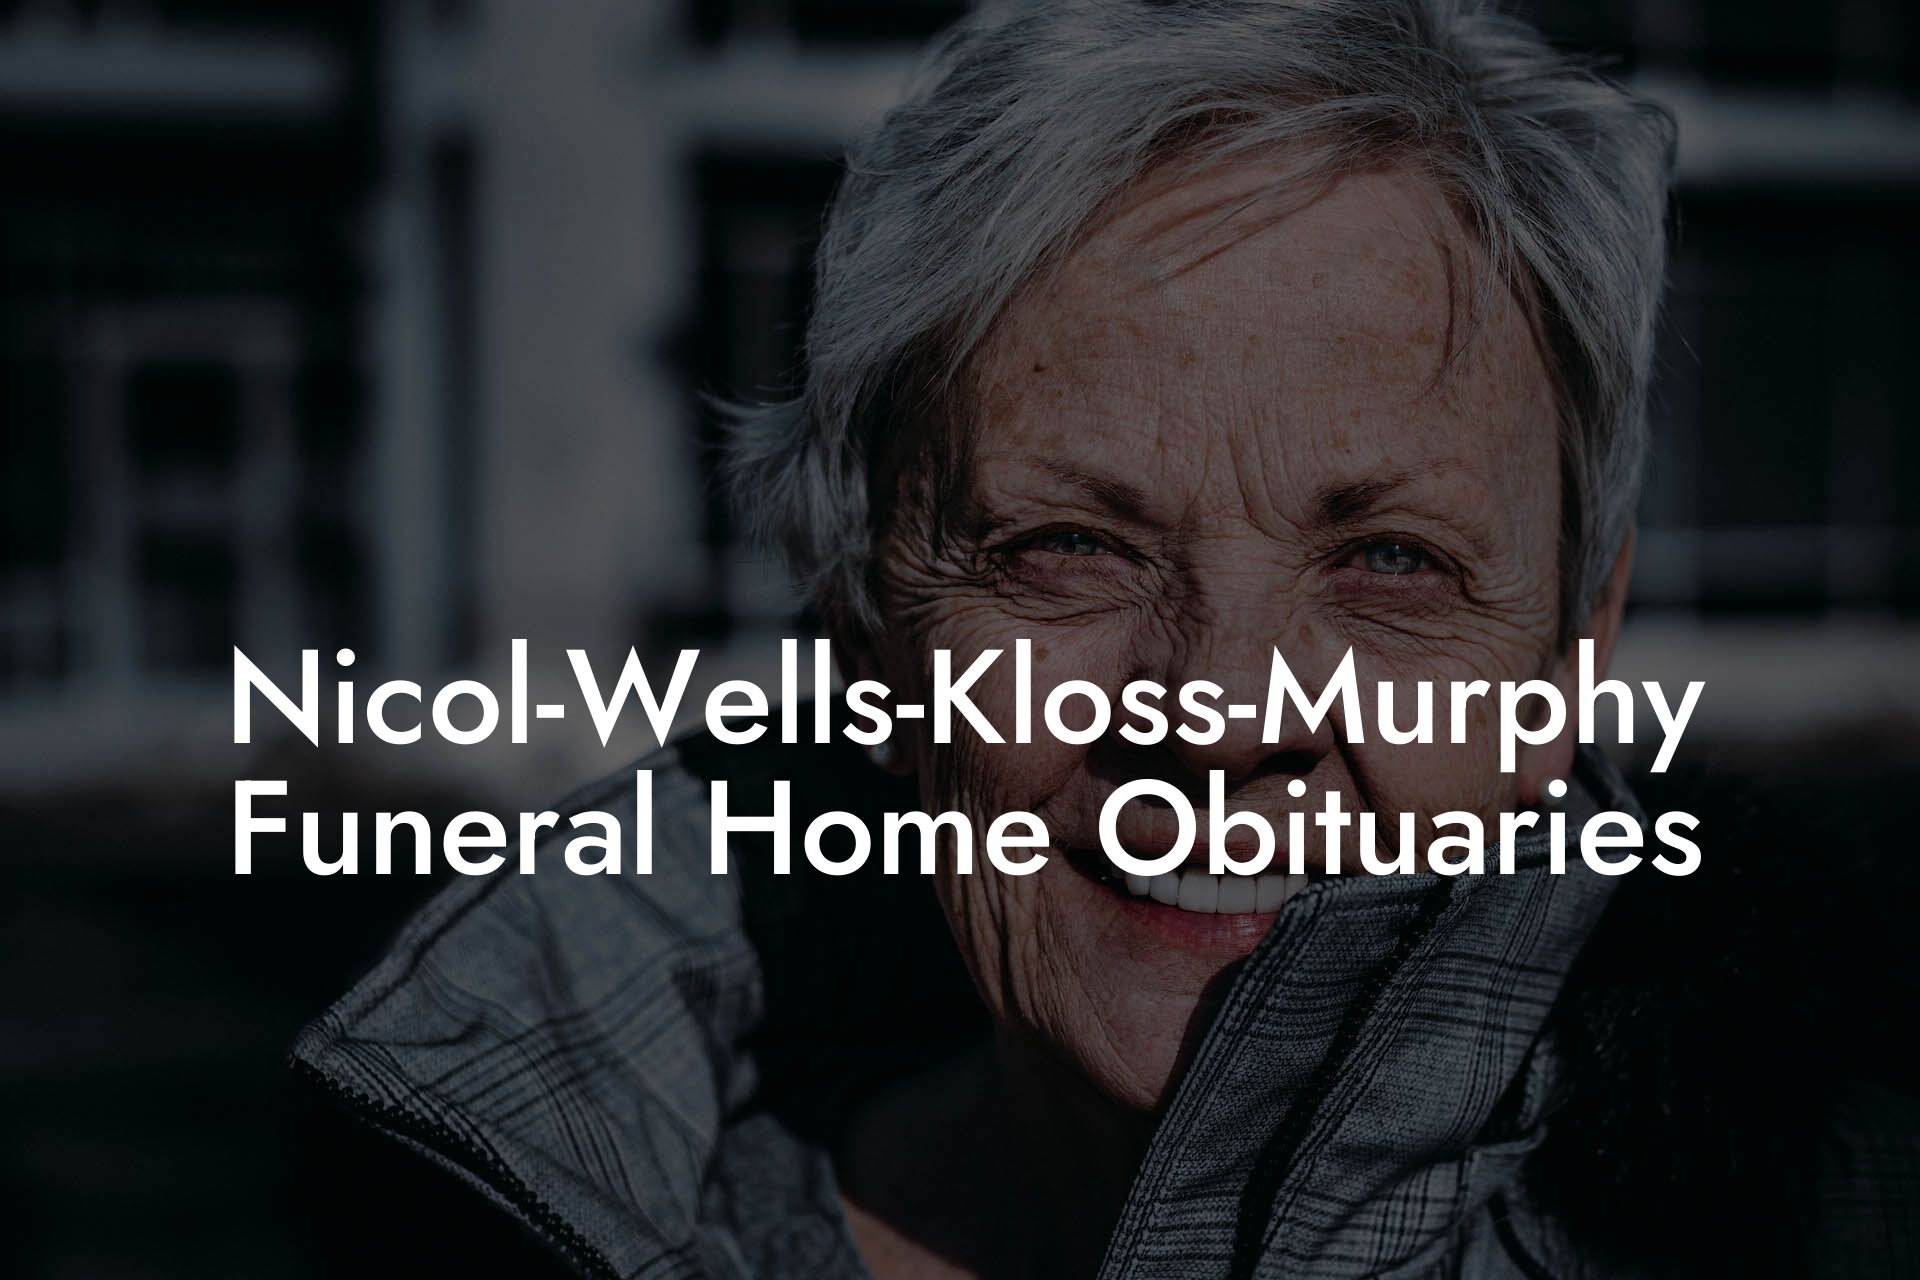 Nicol-Wells-Kloss-Murphy Funeral Home Obituaries